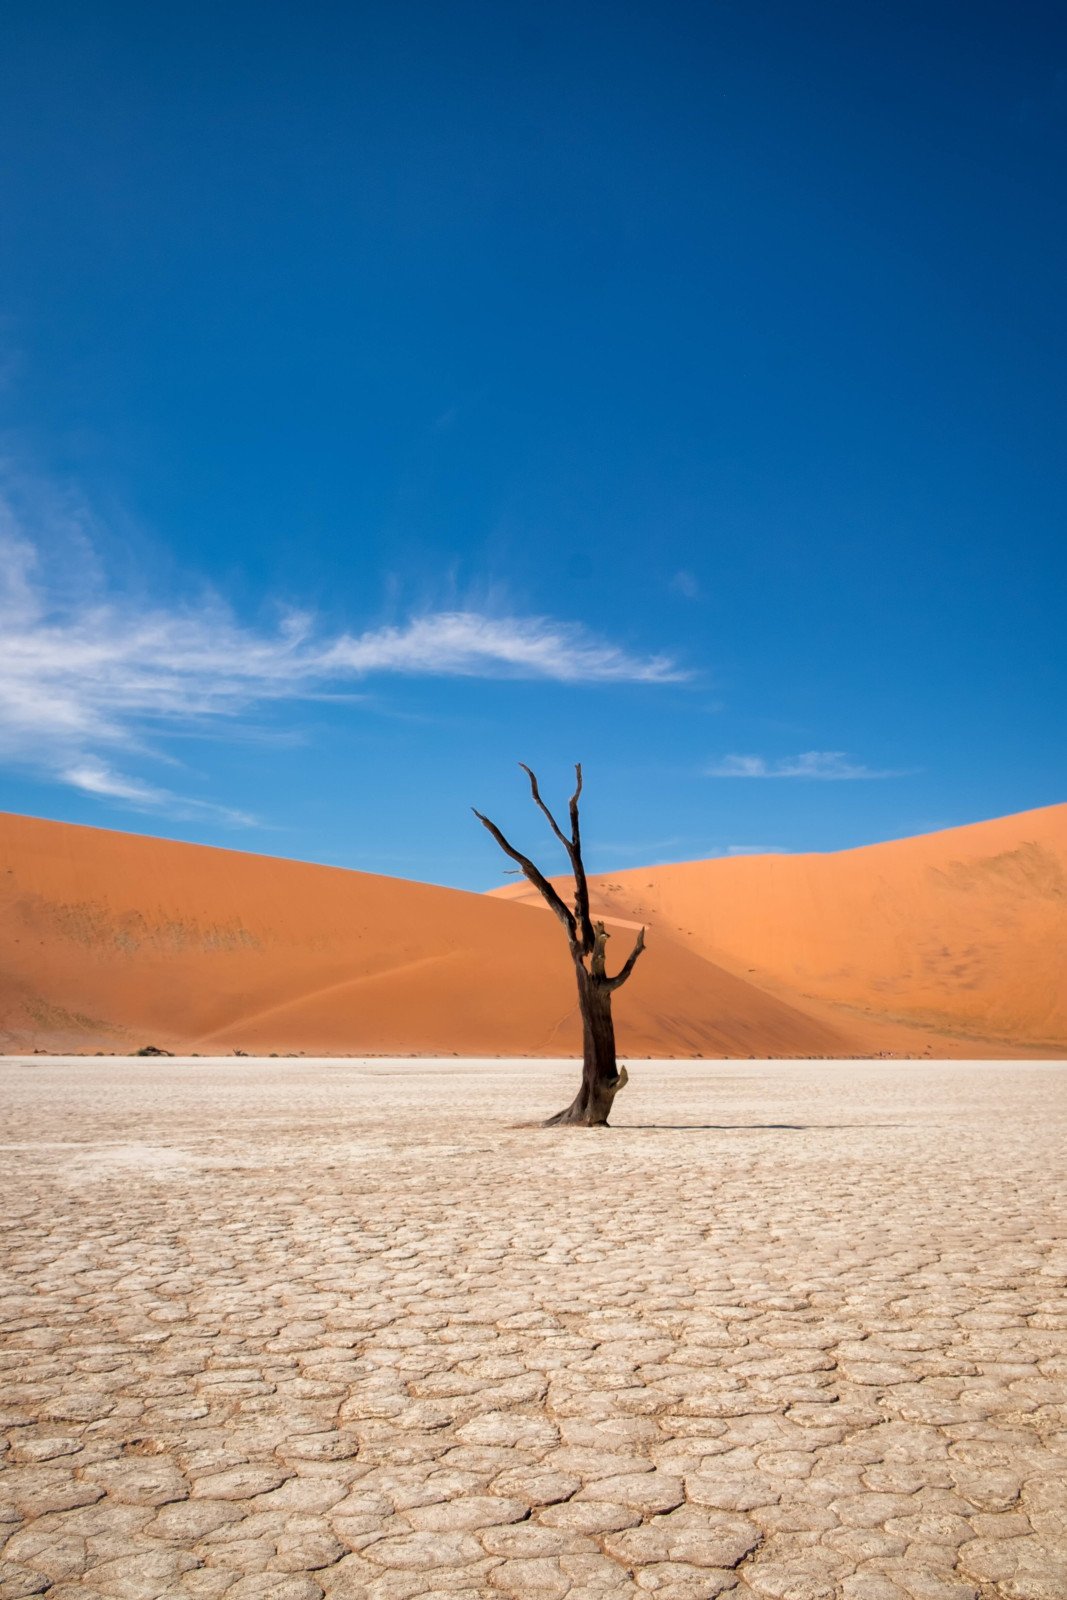 Namib deseert - Namibië rondreis